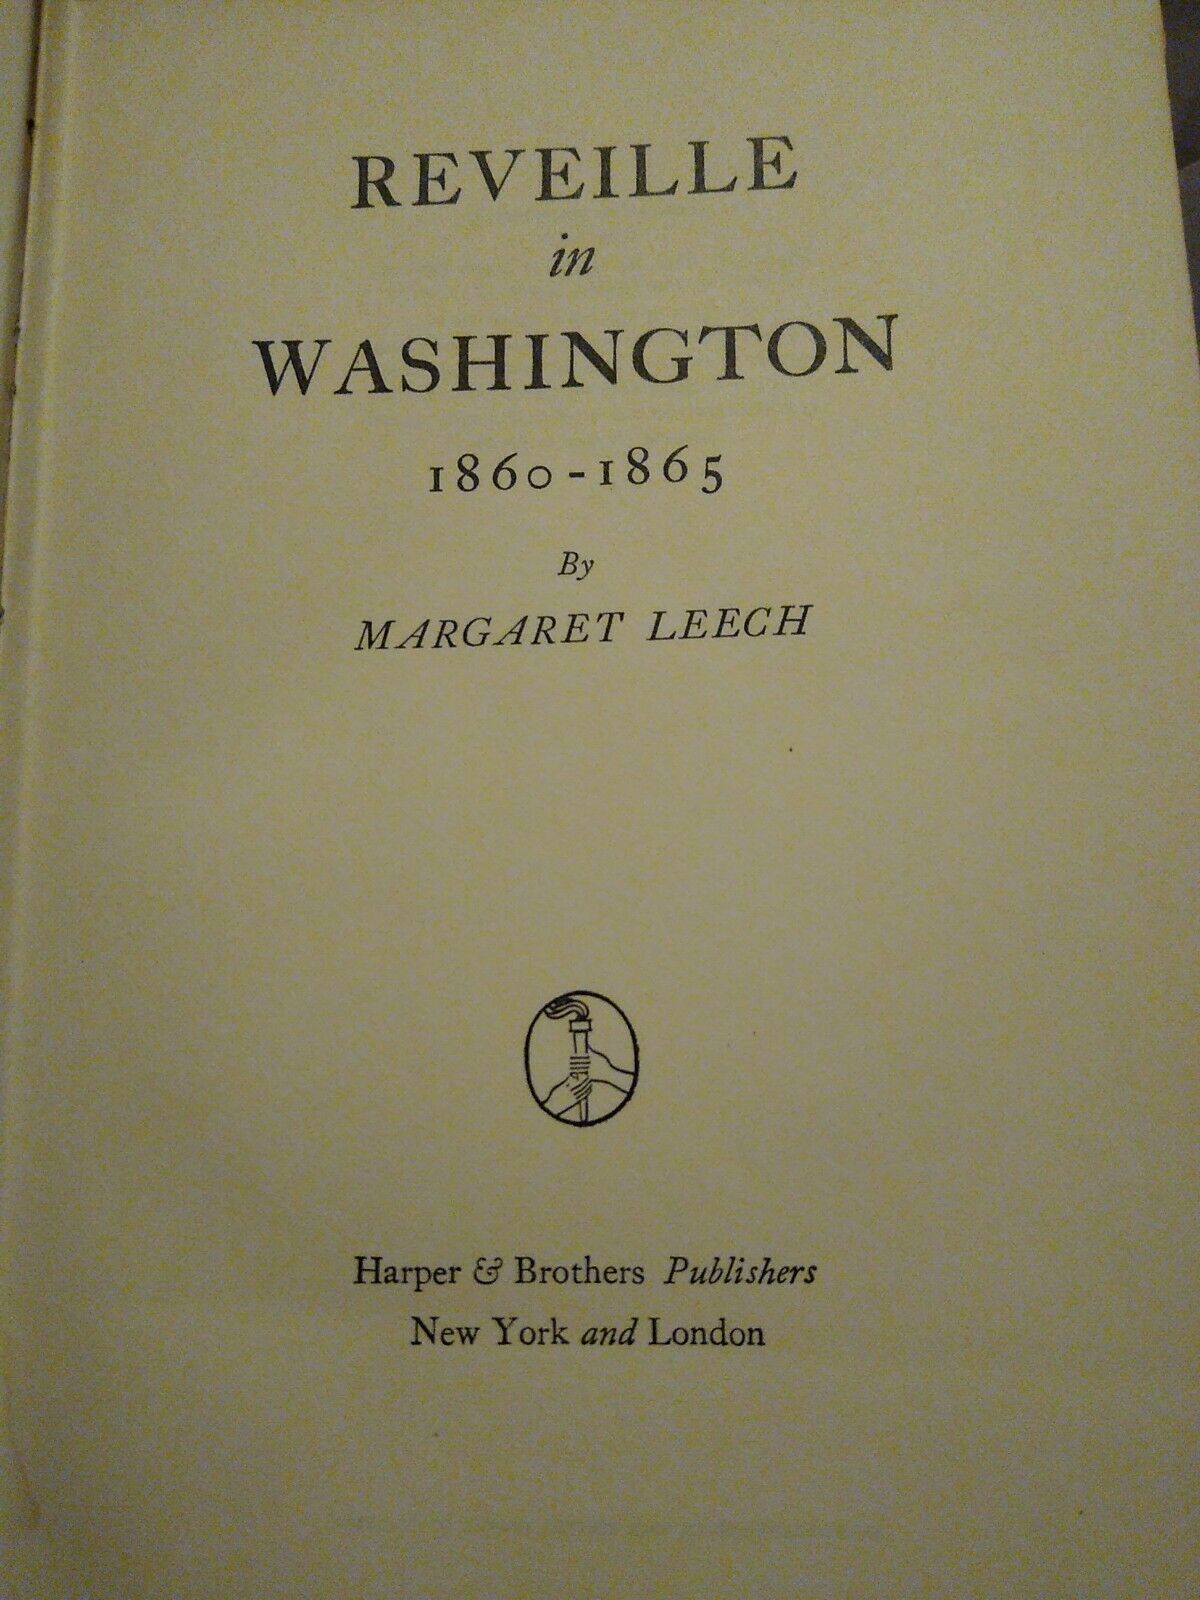 Reveille in Washington 1860-1865 by Margaret Leech. Vintage (1941, Hardcover).